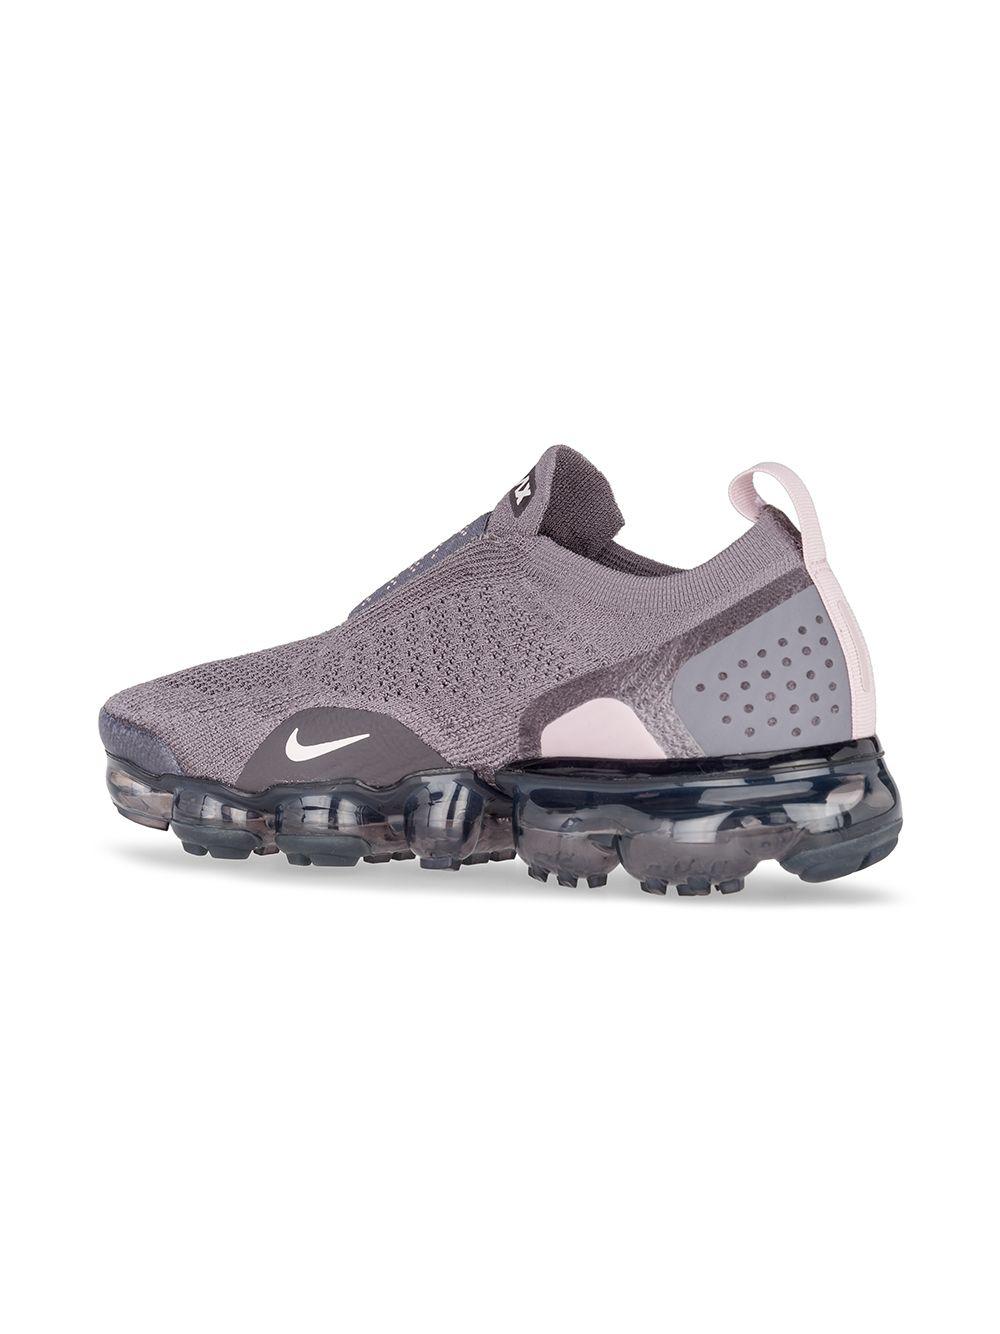 Nike Rubber Air Vapormax Flyknit Moc Sneakers in Grey (Grey) - Lyst